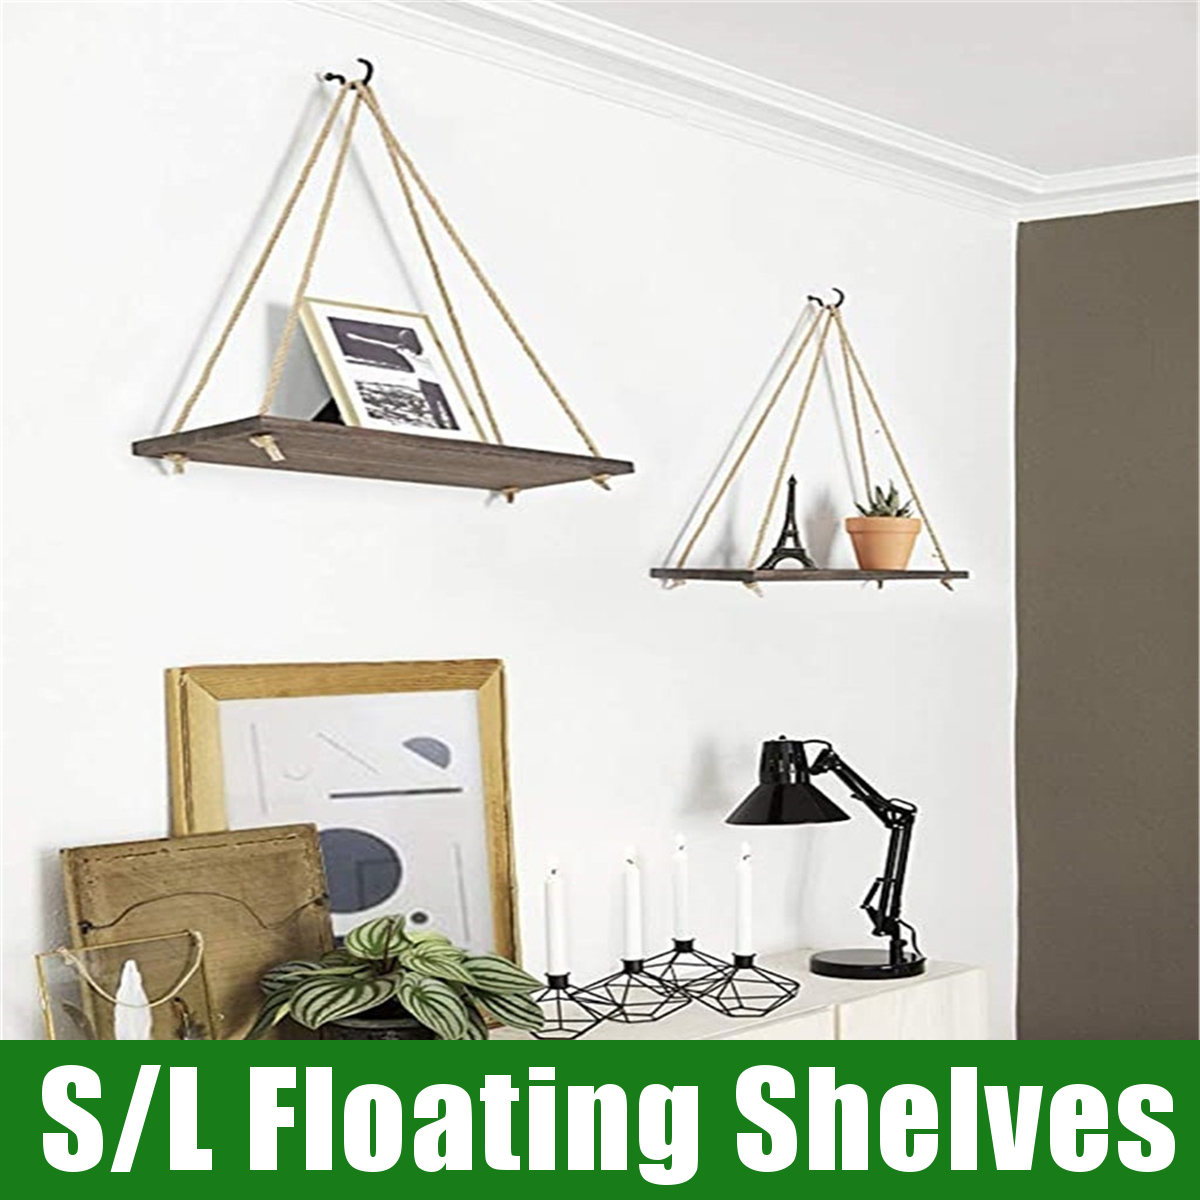 Wooden-Hanging-Shelf-Swing-Floating-Shelves-Rope-Wall-Display-Rack-Decorate-1828914-1